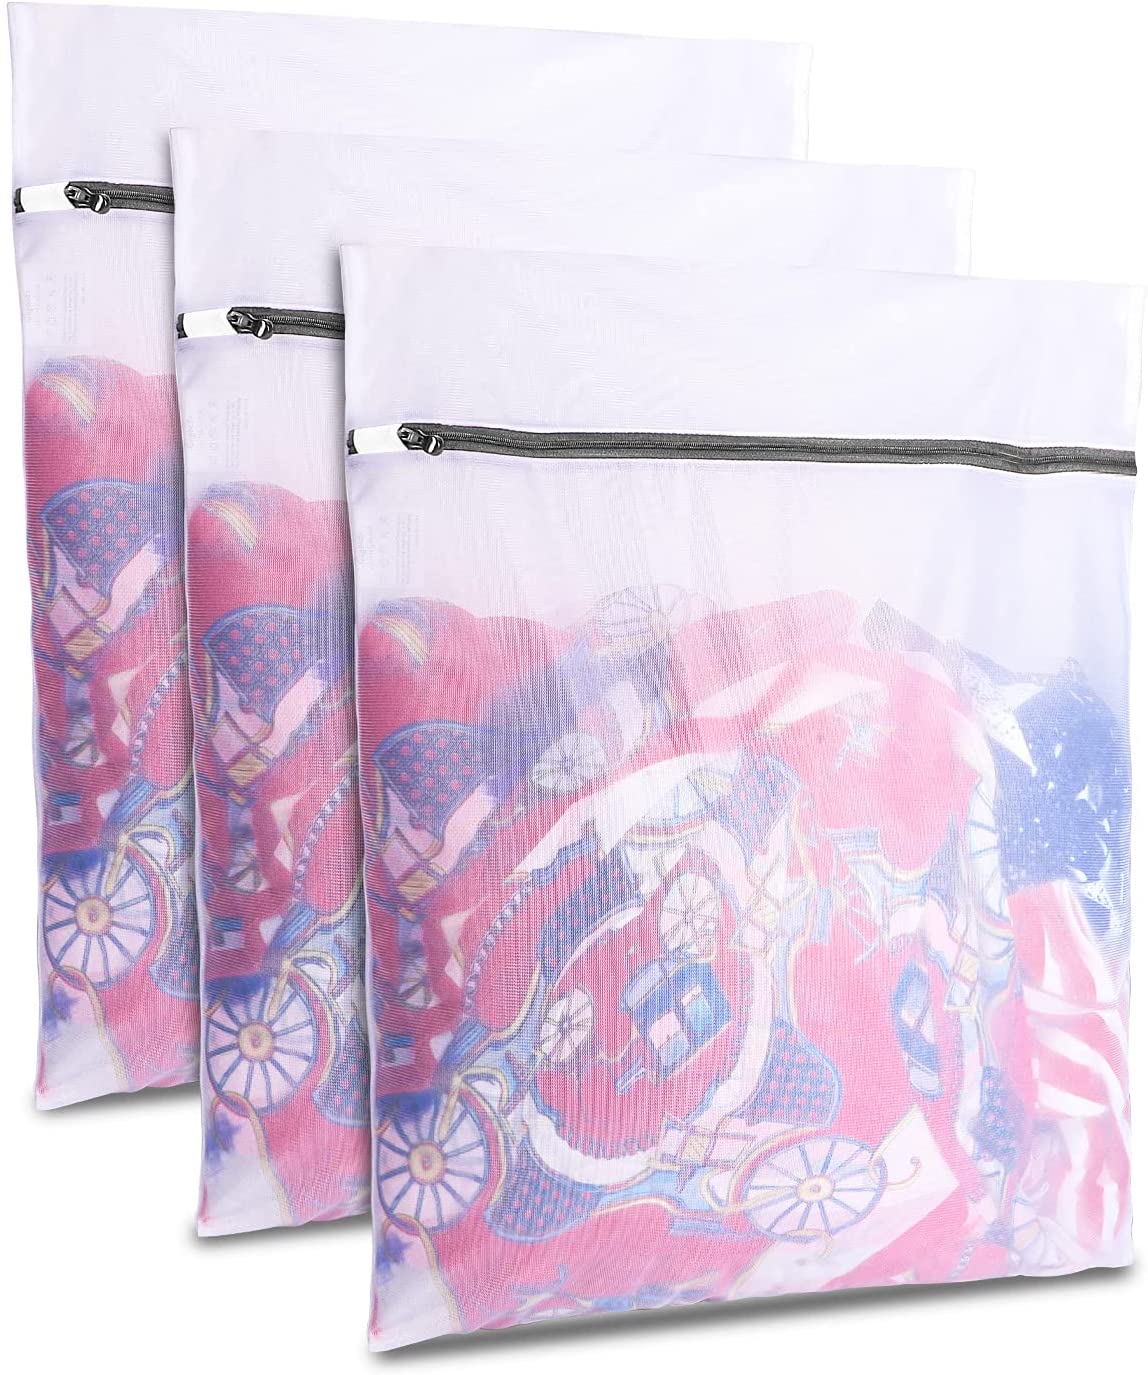 Gogooda 7Pcs Mesh Laundry Bags for Delicates with Premium Zipper Travel Stor... 